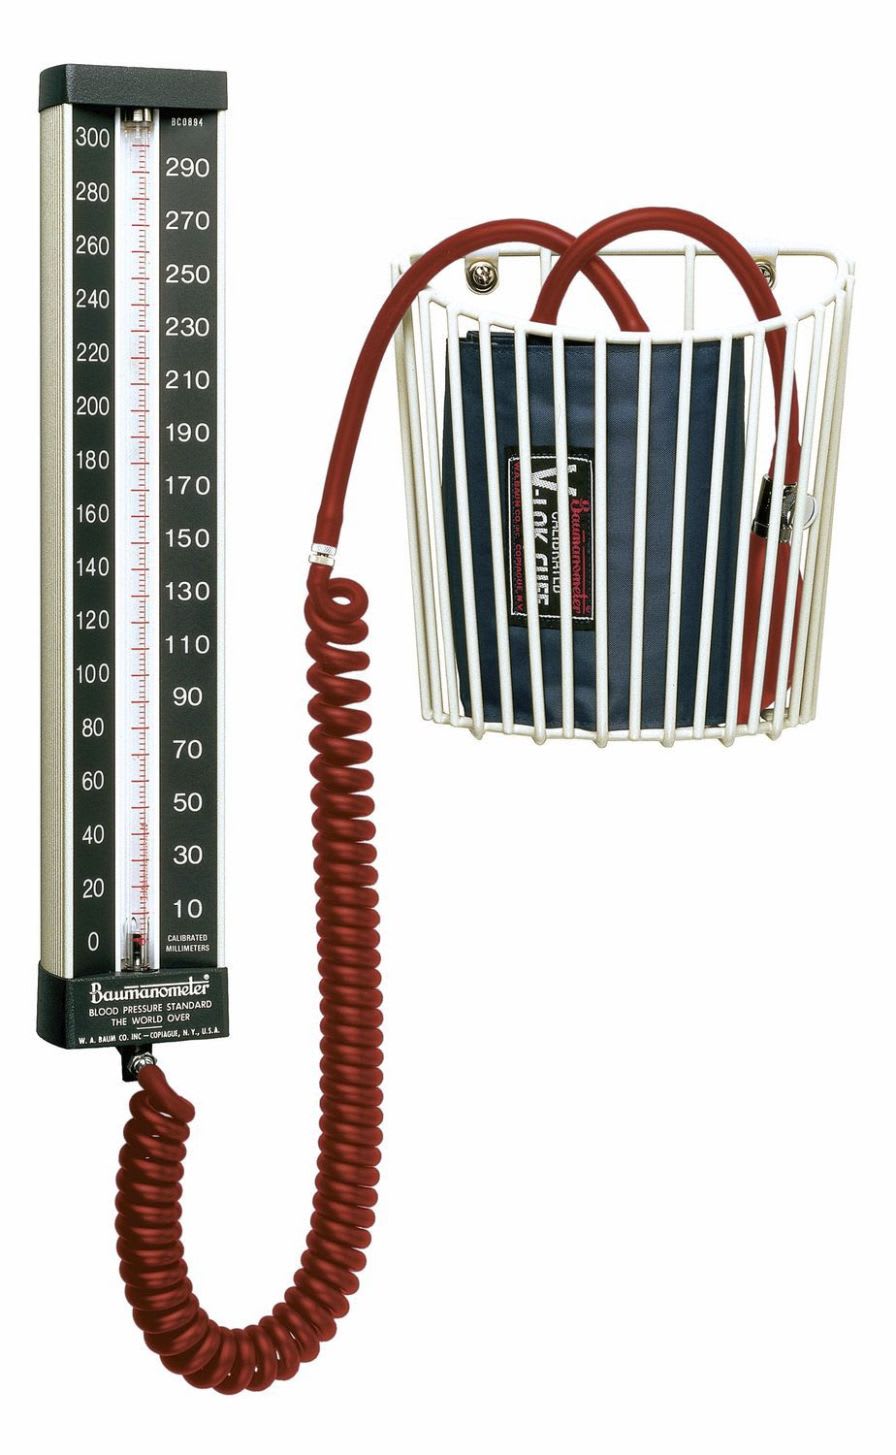 Mercury sphygmomanometer / wall-mounted Baumanometer® Wall Unit 33 Series W.A. Baum